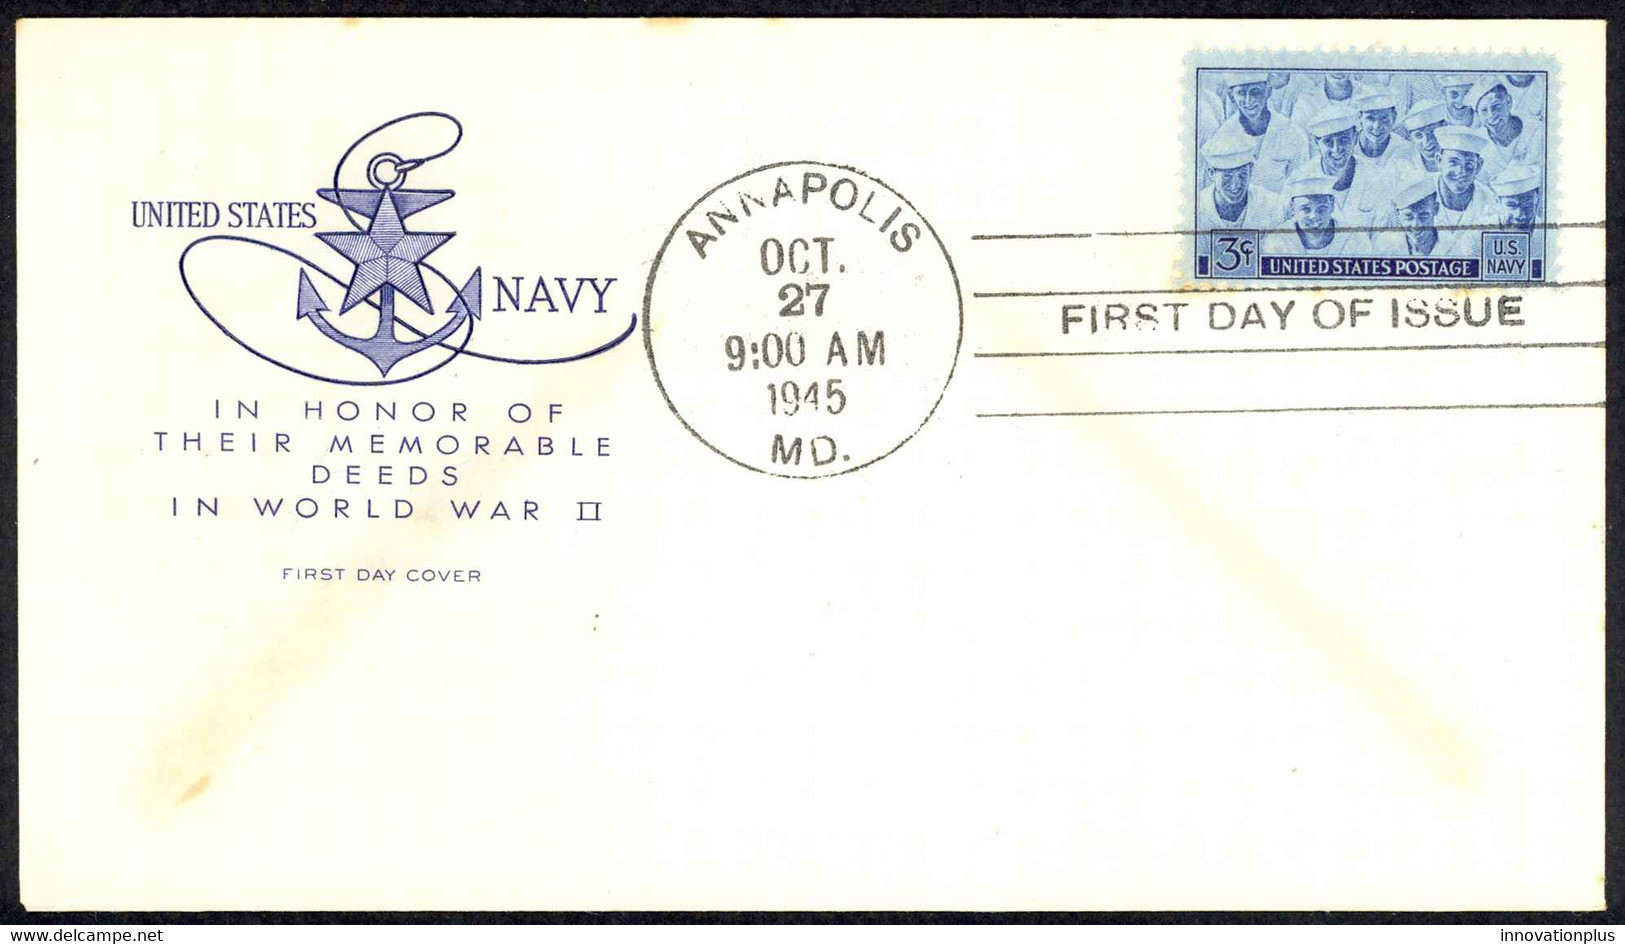 USA Sc# 935 (cachet) FDC (b) (Annapolis, MD) 1945 10.27 Navy - 1941-1950